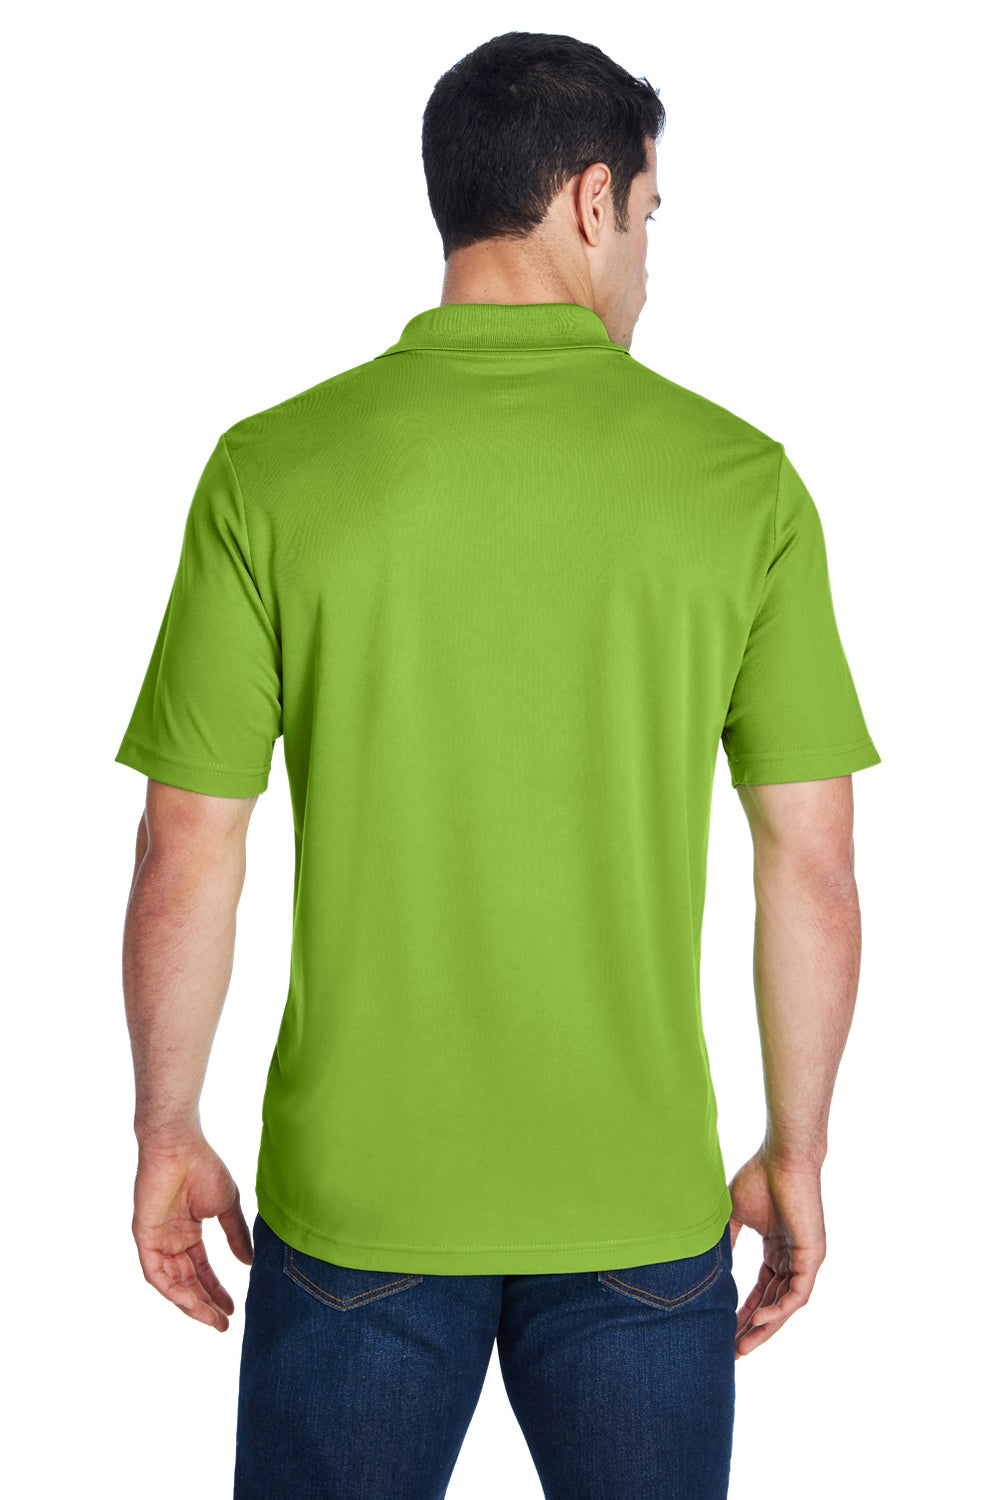 Core 365 88181 Mens Origin Performance Moisture Wicking Short Sleeve Polo Shirt Acid Green Back